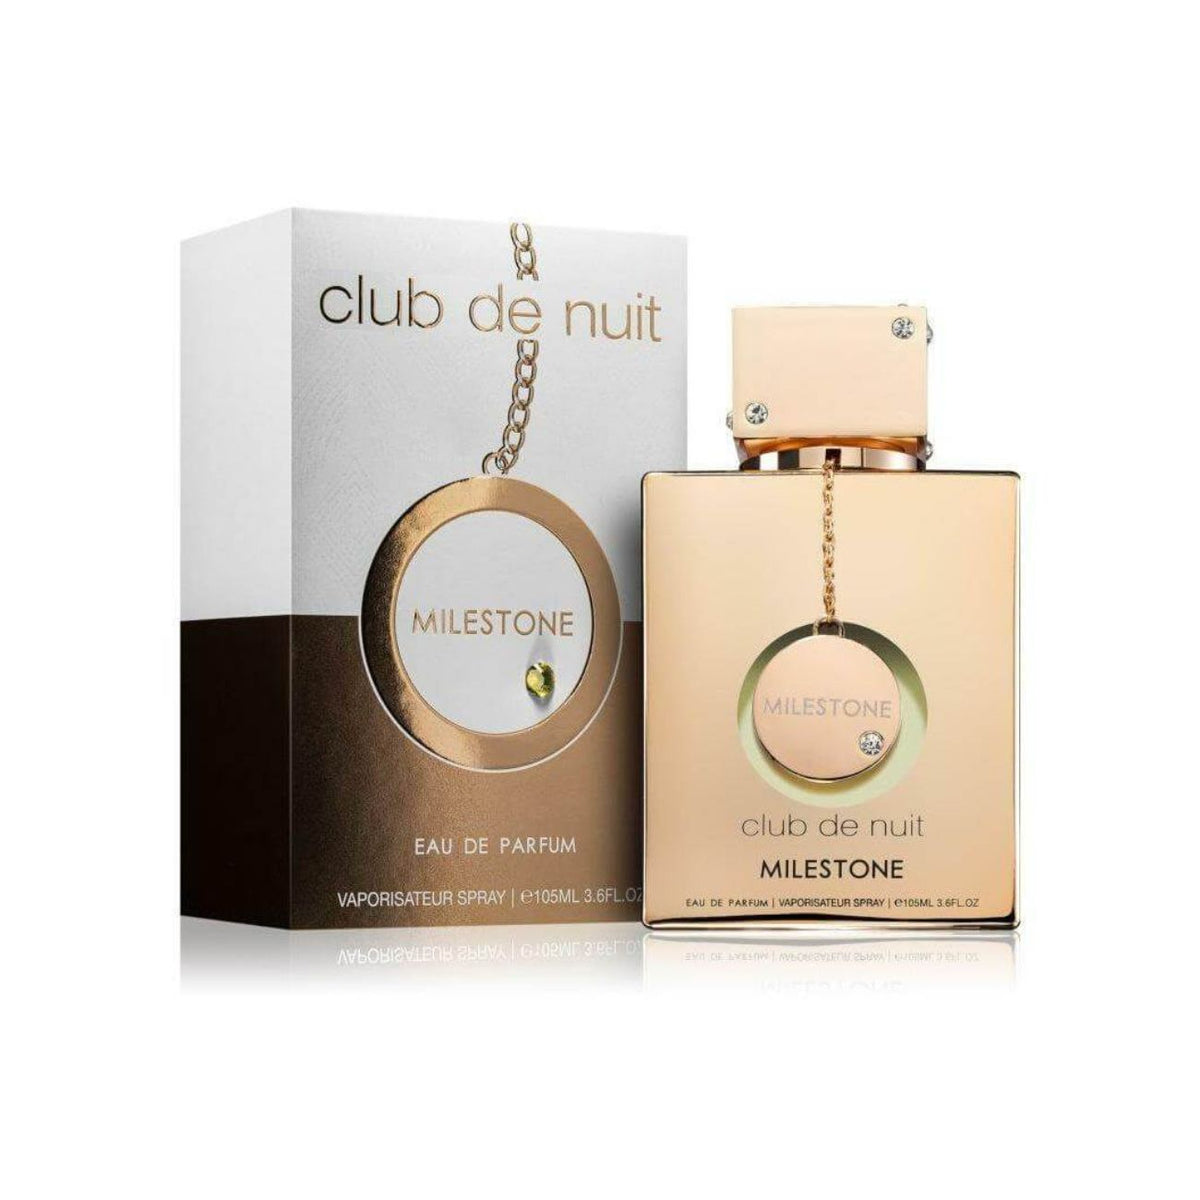 Perfume de mujer club de nuit milestone edp 105 ml